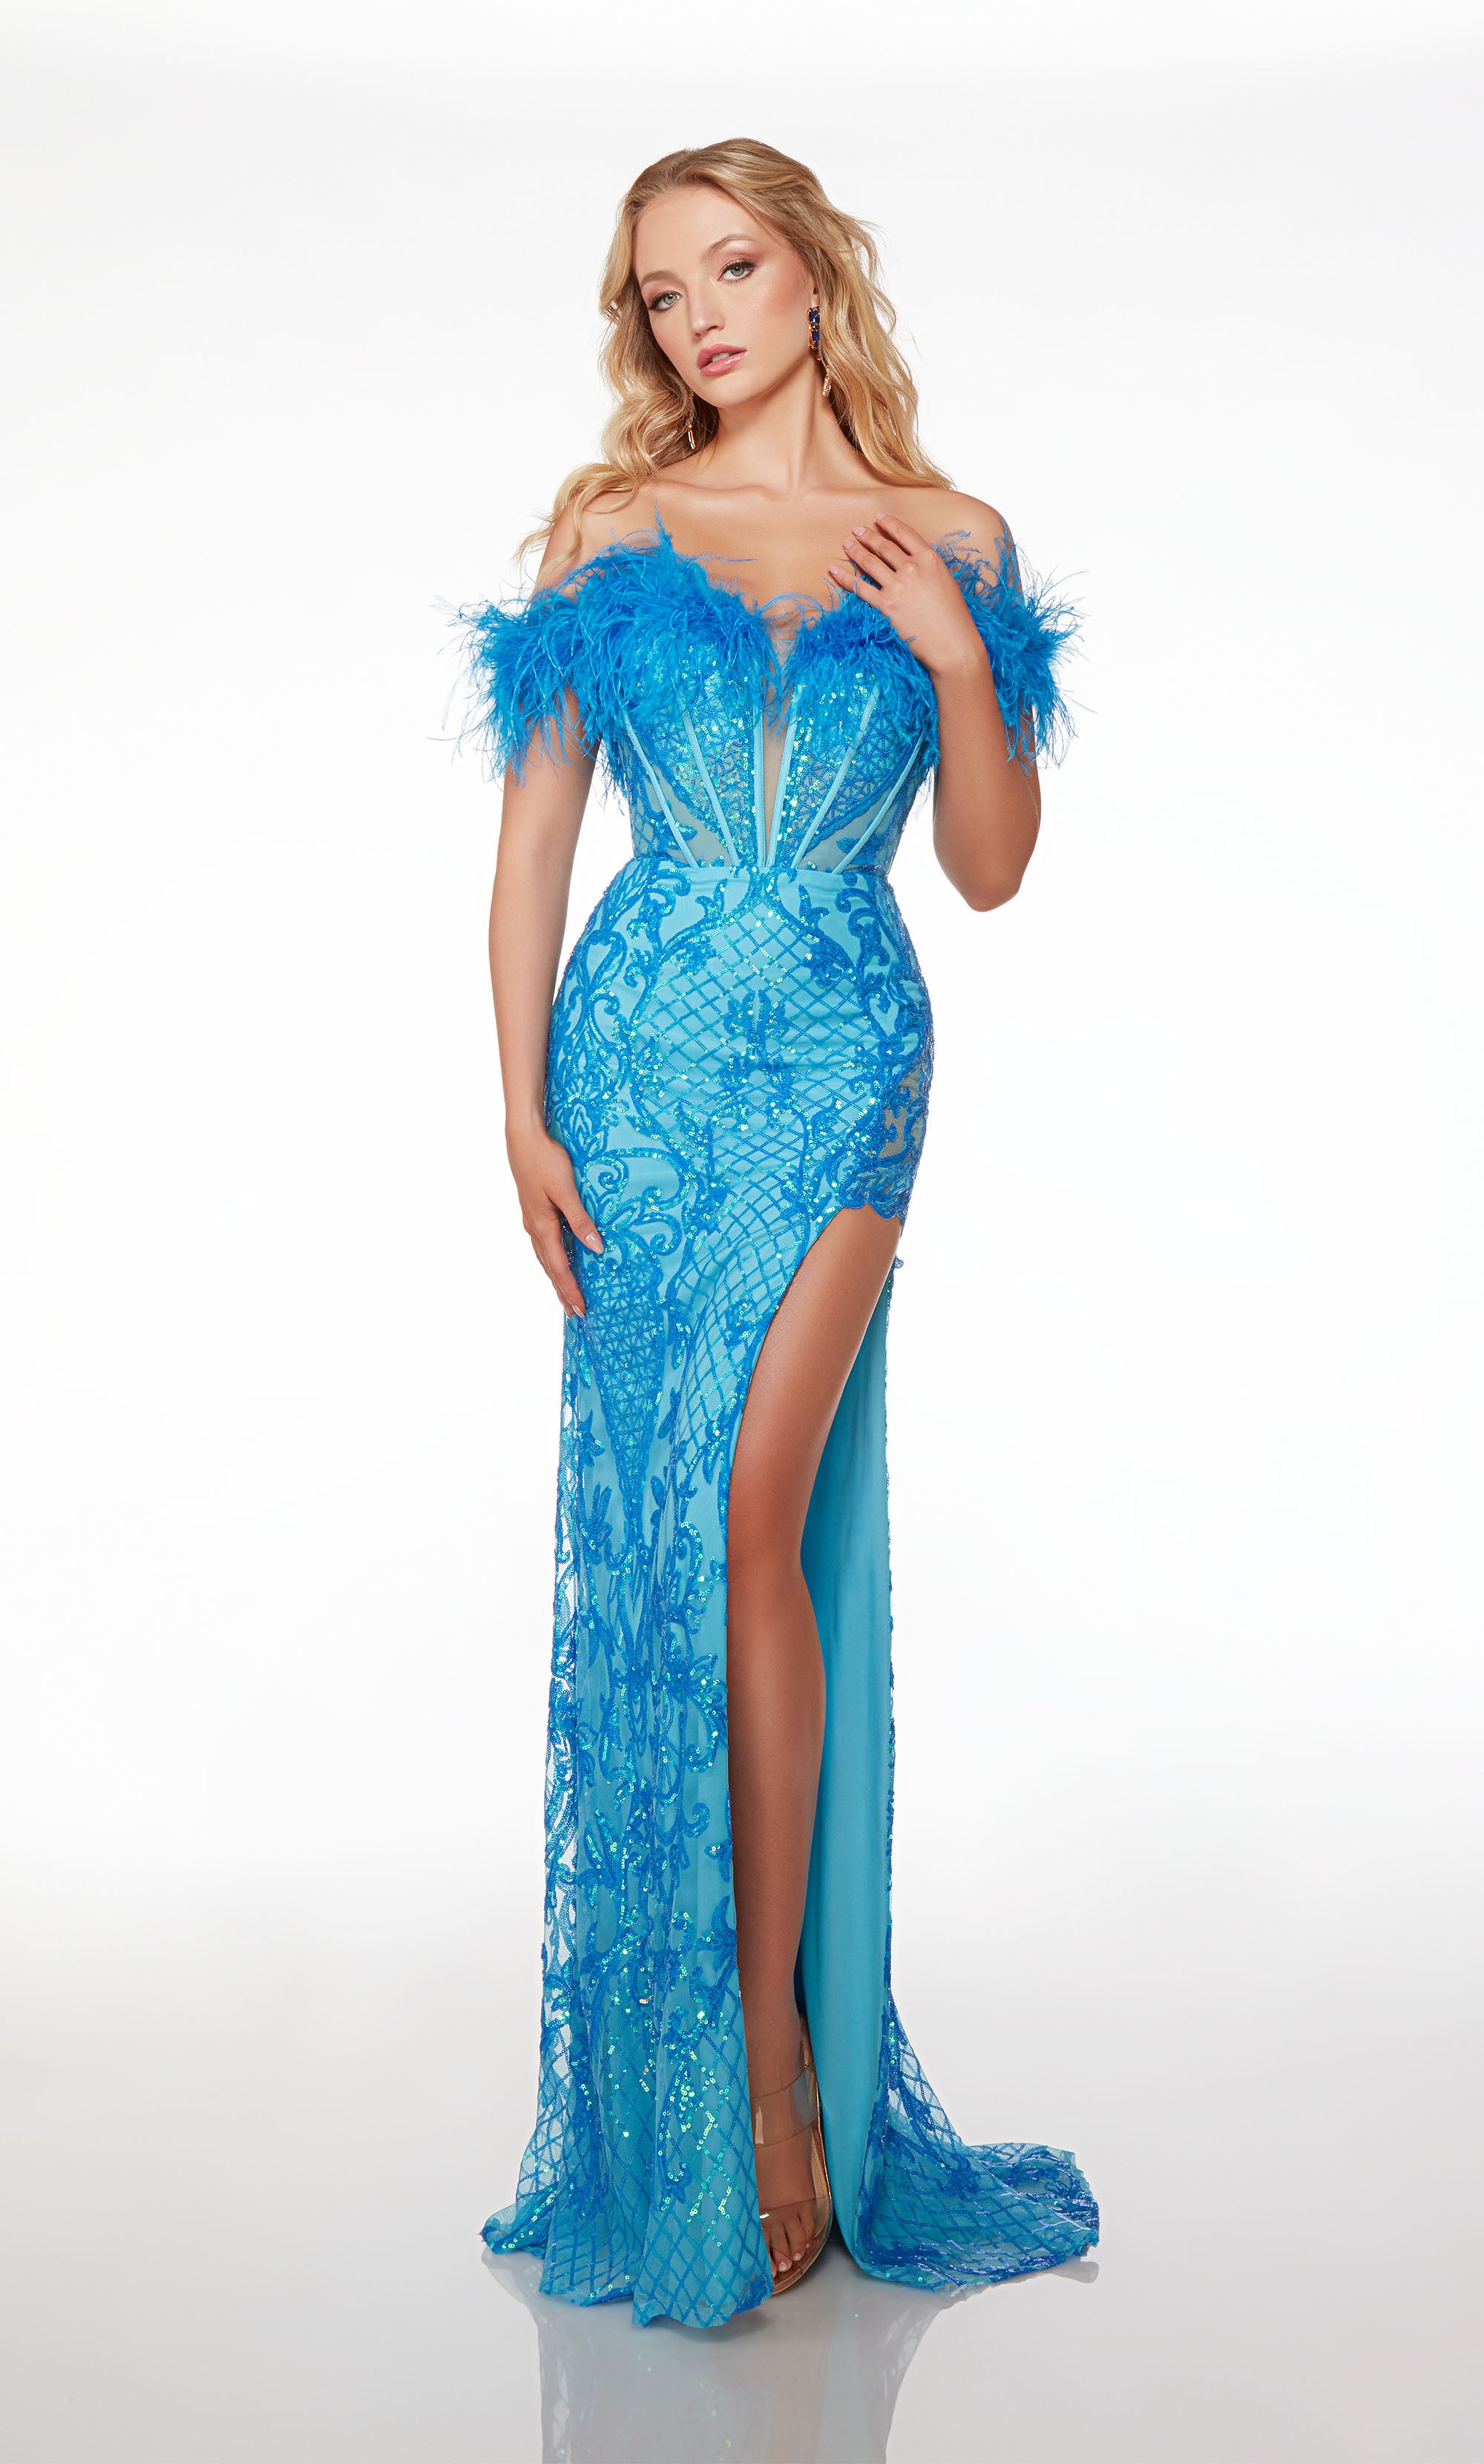 Unique prom dress: feather-trimmed off-shoulder neckline, corset bodice, intricate sequin detailing, high slit, zip-up back, and train in vivid ocean blue.